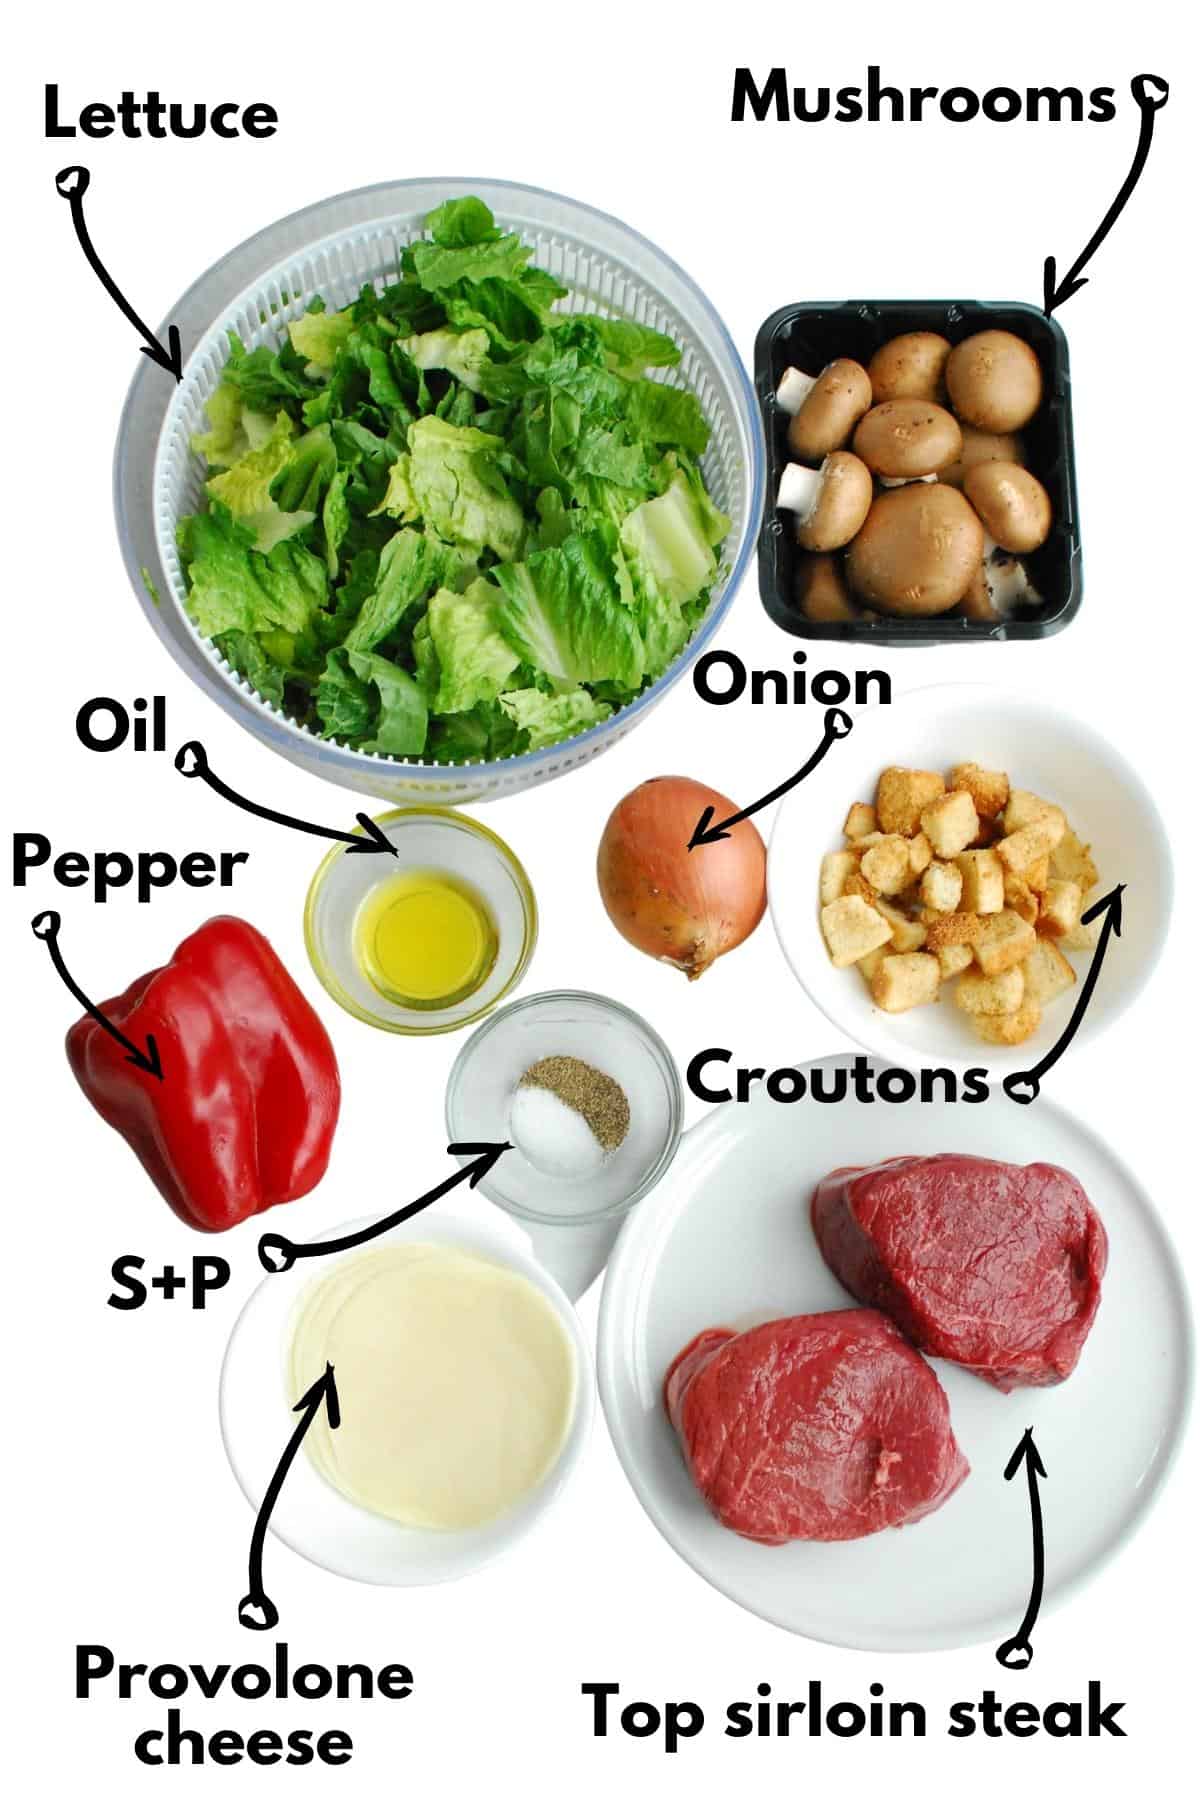 Lettuce, mushrooms, onion, pepper, oil, salt, pepper, steak, cheese, and croutons.